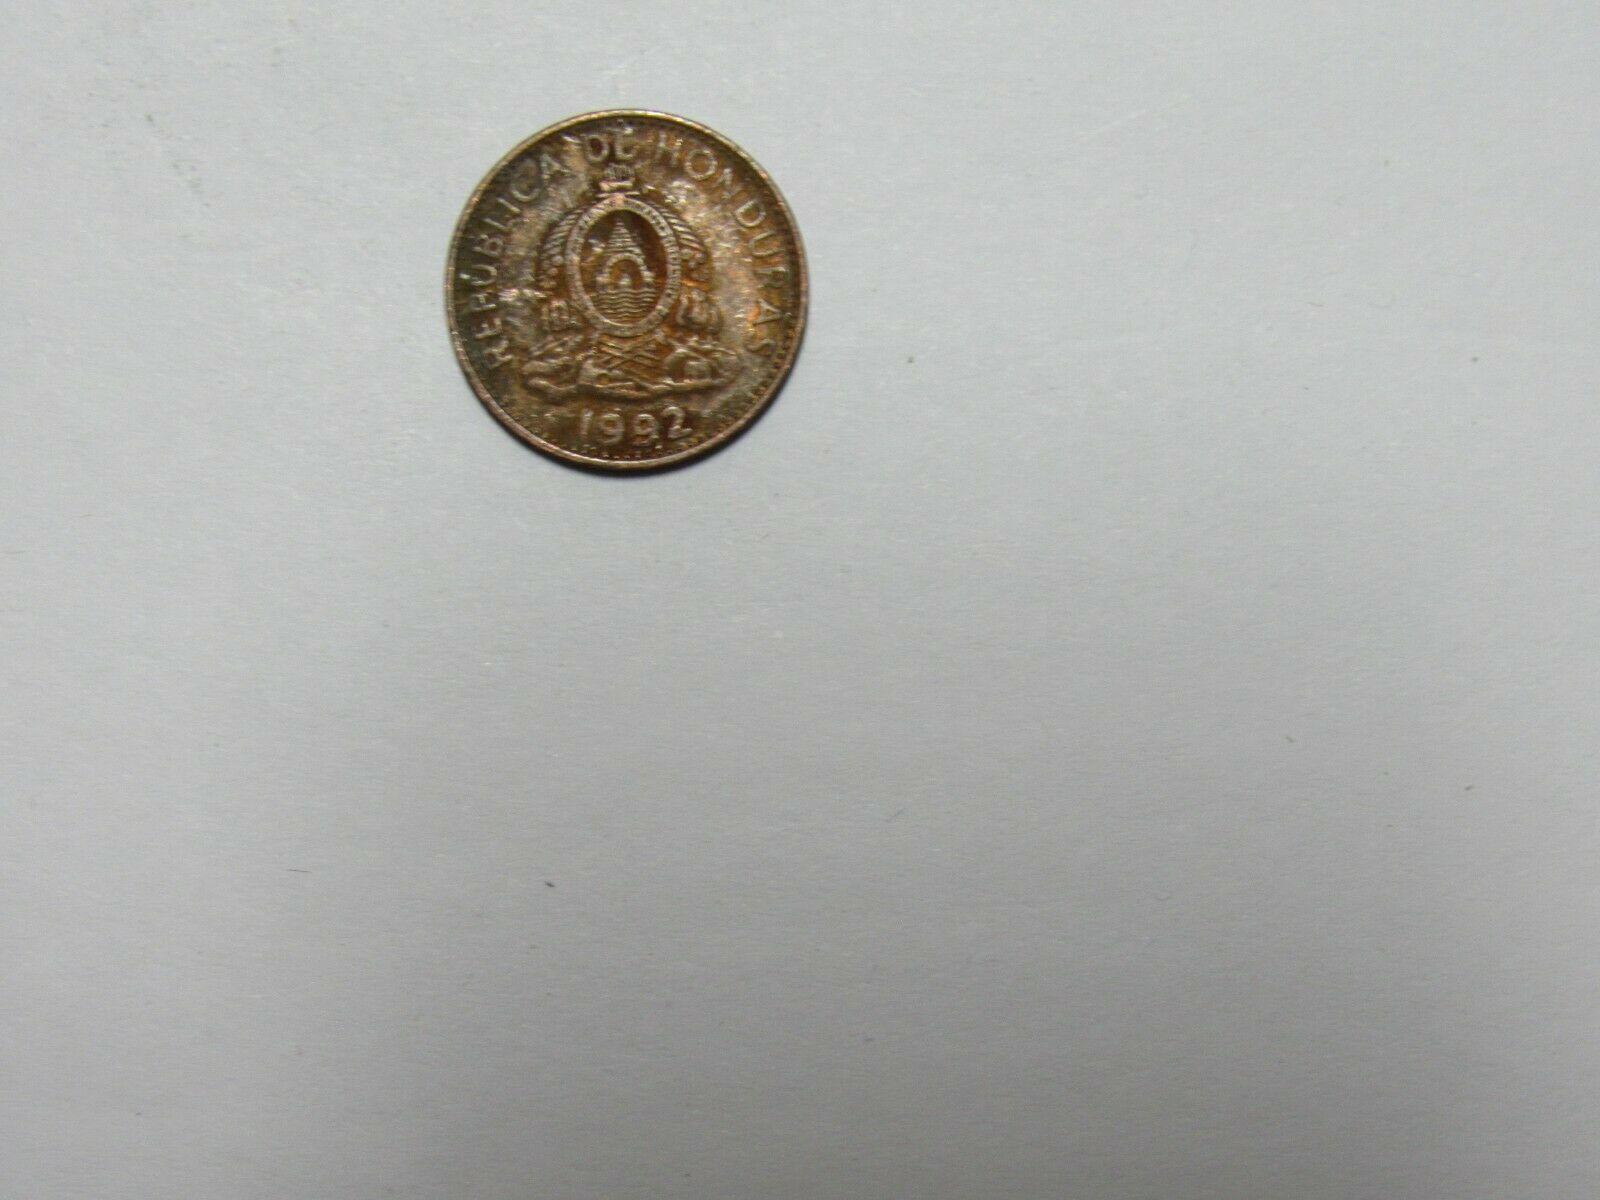 Honduras Coin - 1992 1 Centavo - Circulated, Discolored, Rim Dings